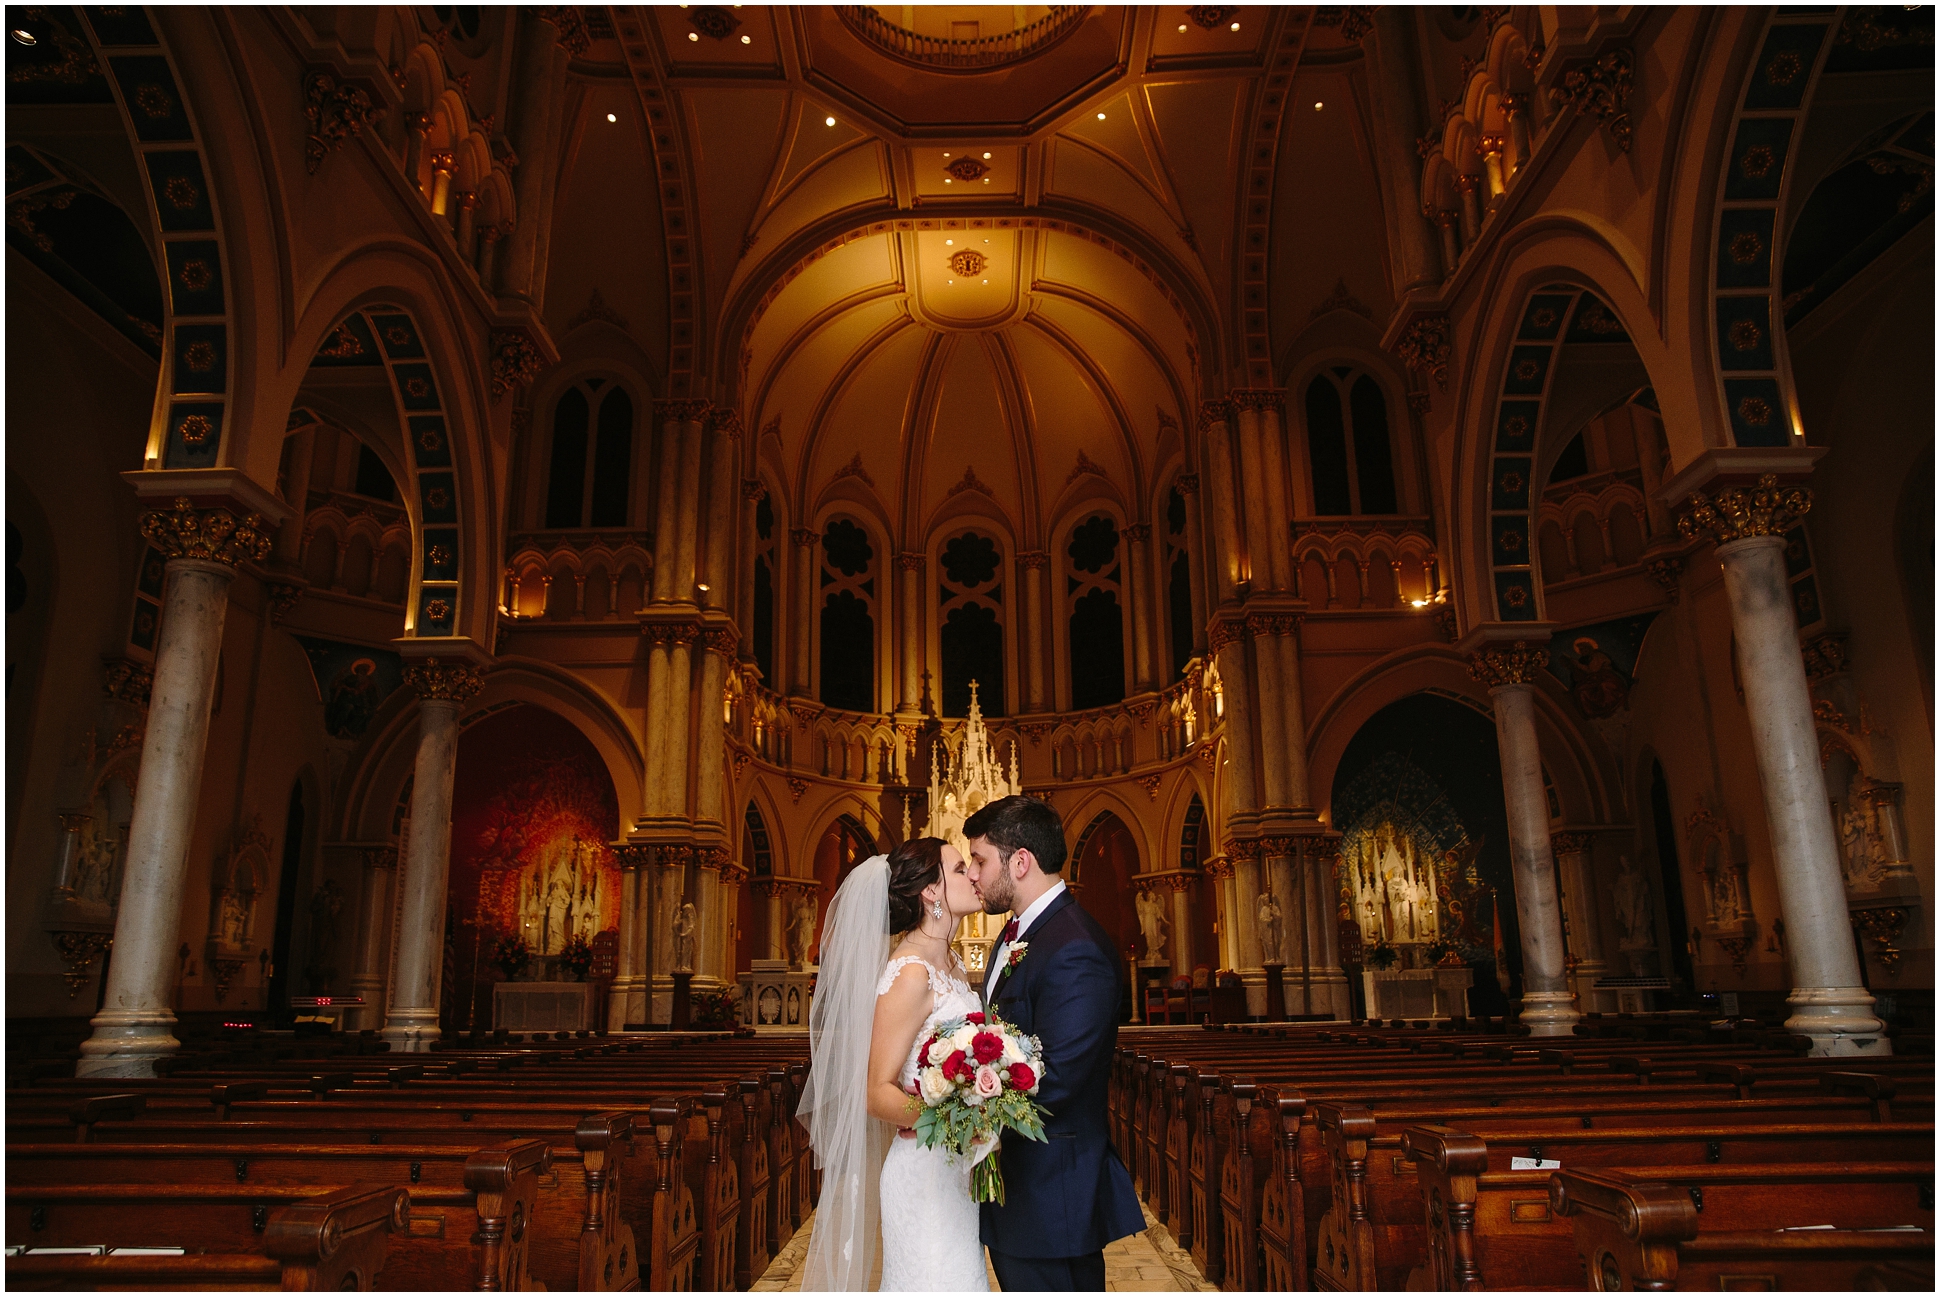 Two Chics Photography | Armory Ballroom and St Joesph Catholic Church Wedding | www.twochicsphotography.com